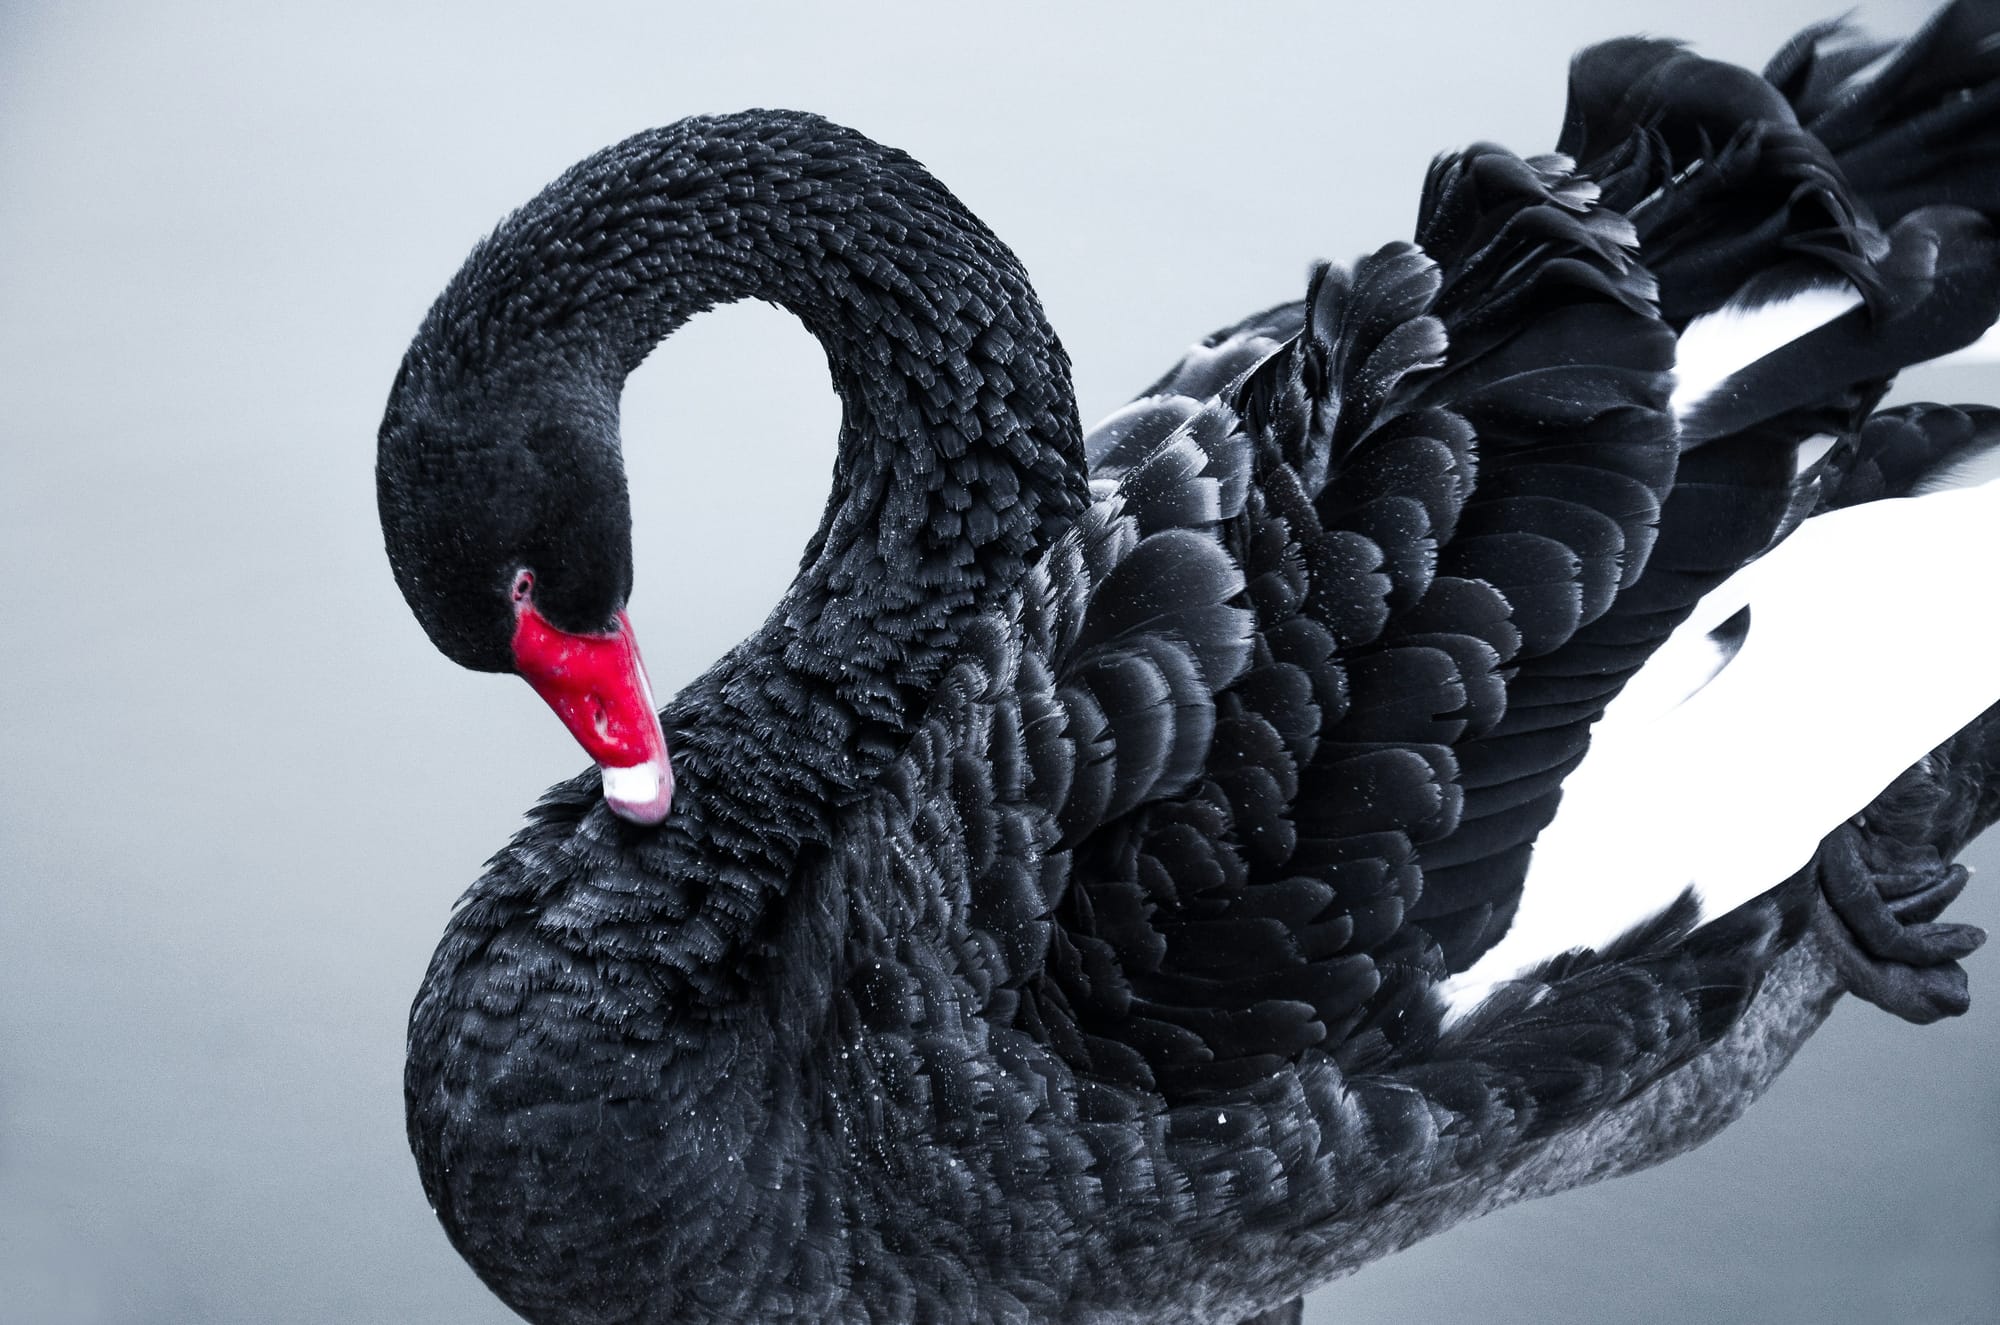 Digital Adoption: The Black Swan Theory